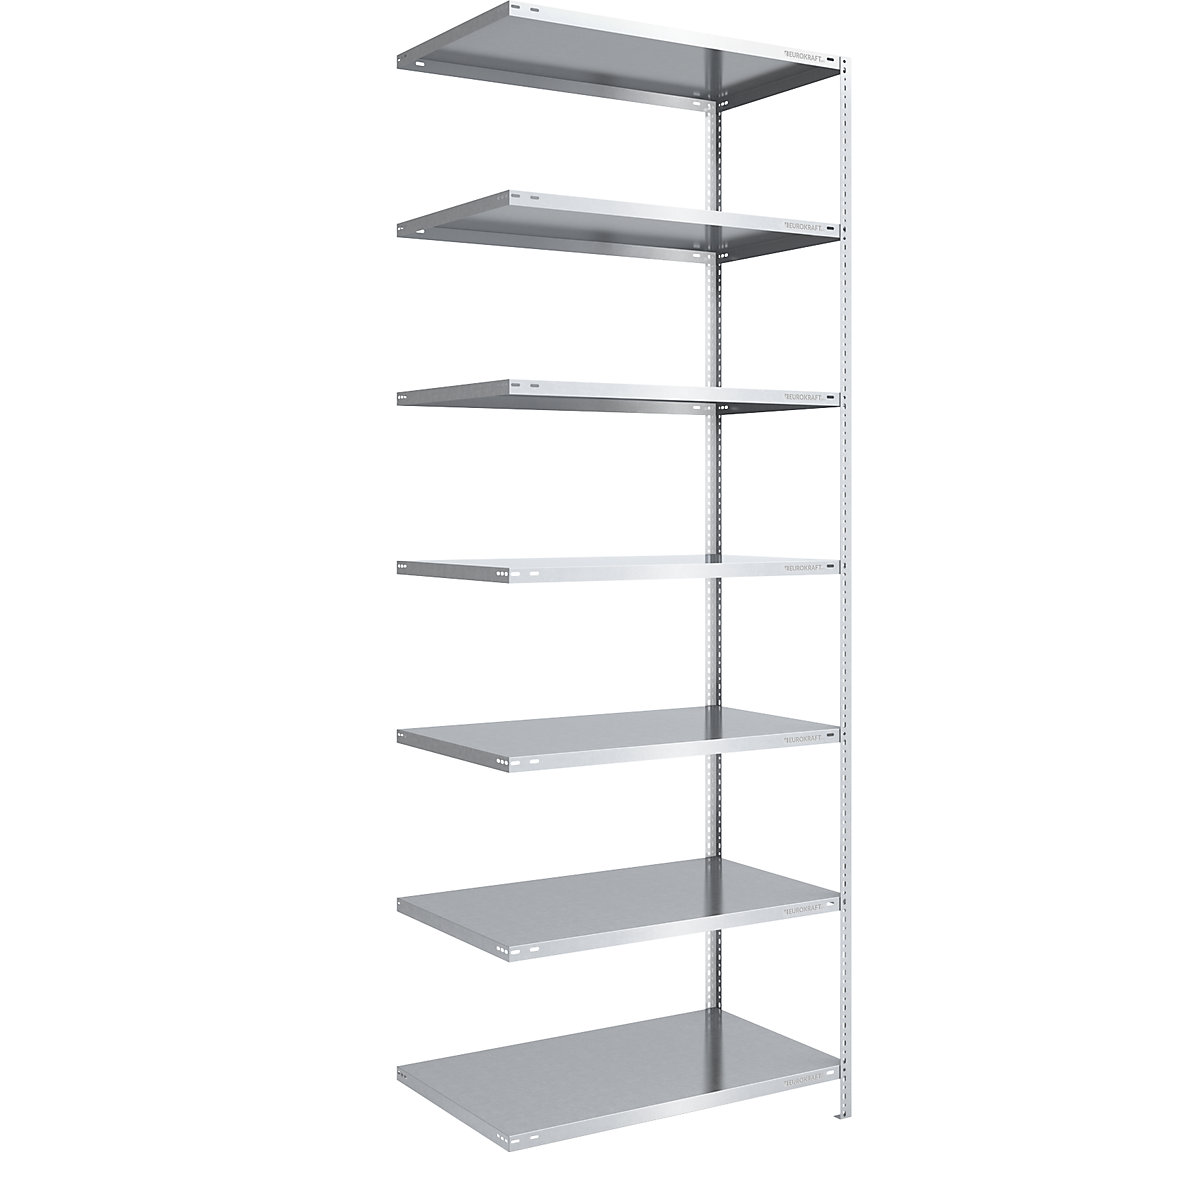 Bolt-together shelf unit, light duty, zinc plated – eurokraft pro, shelf unit height 3000 mm, shelf width 1000 mm, depth 800 mm, extension shelf unit-11